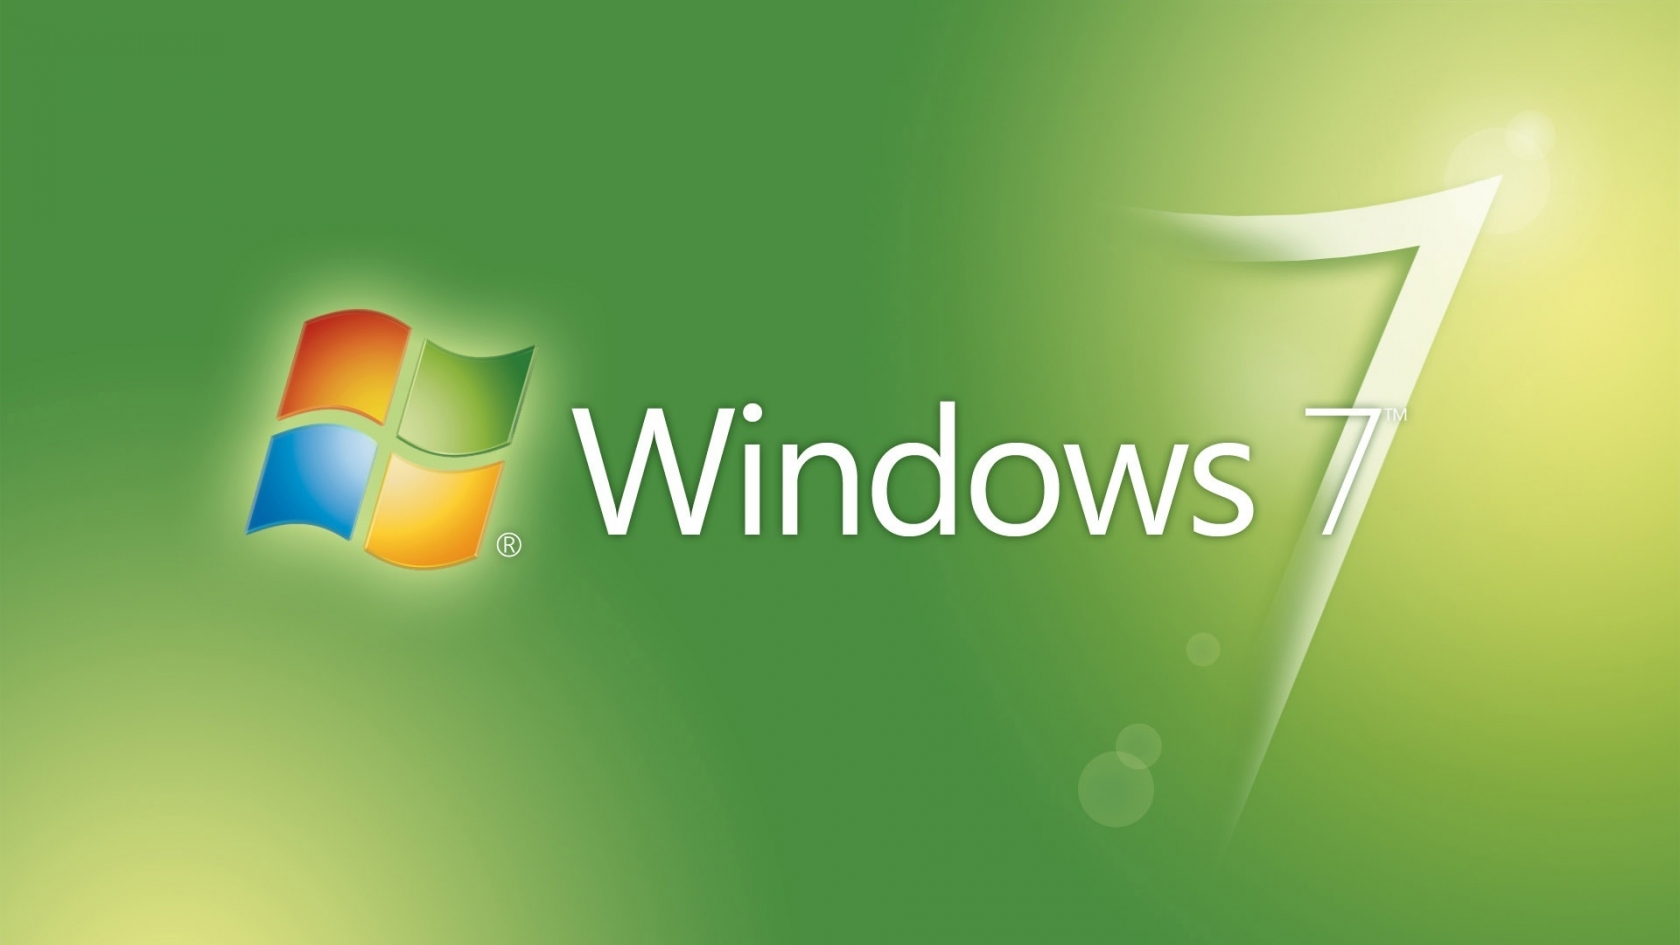 Windows 7 Green for 1680 x 945 HDTV resolution